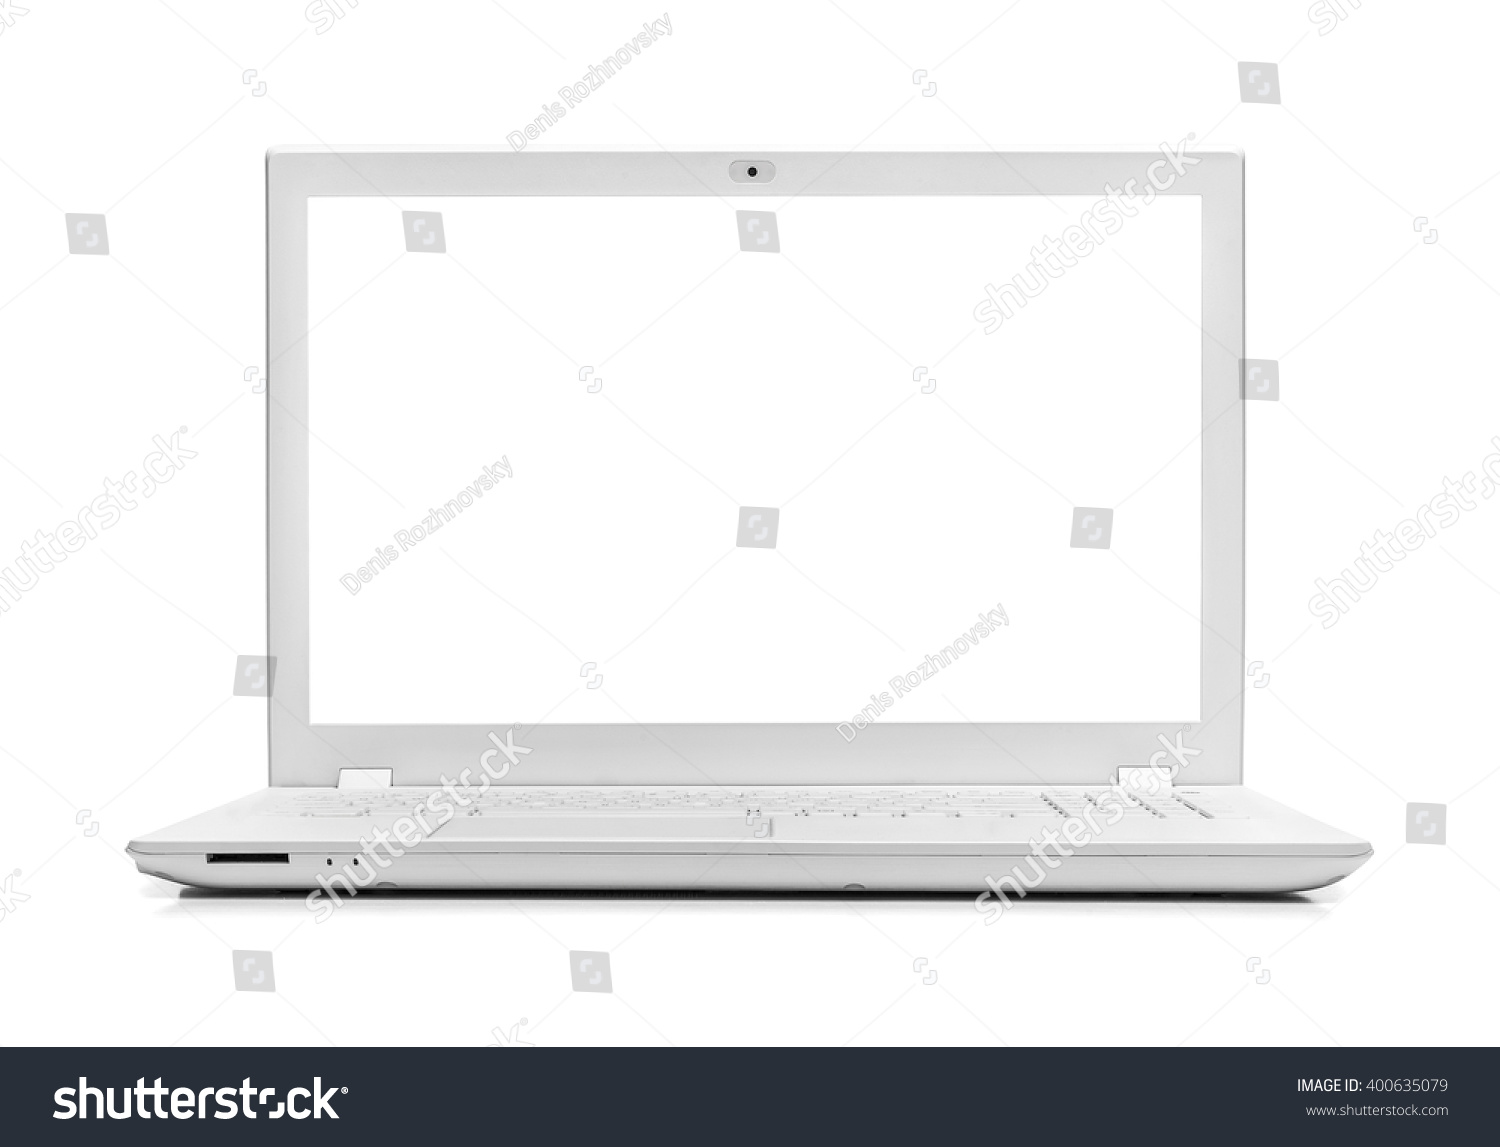 White modern laptop isolated on white background. #400635079